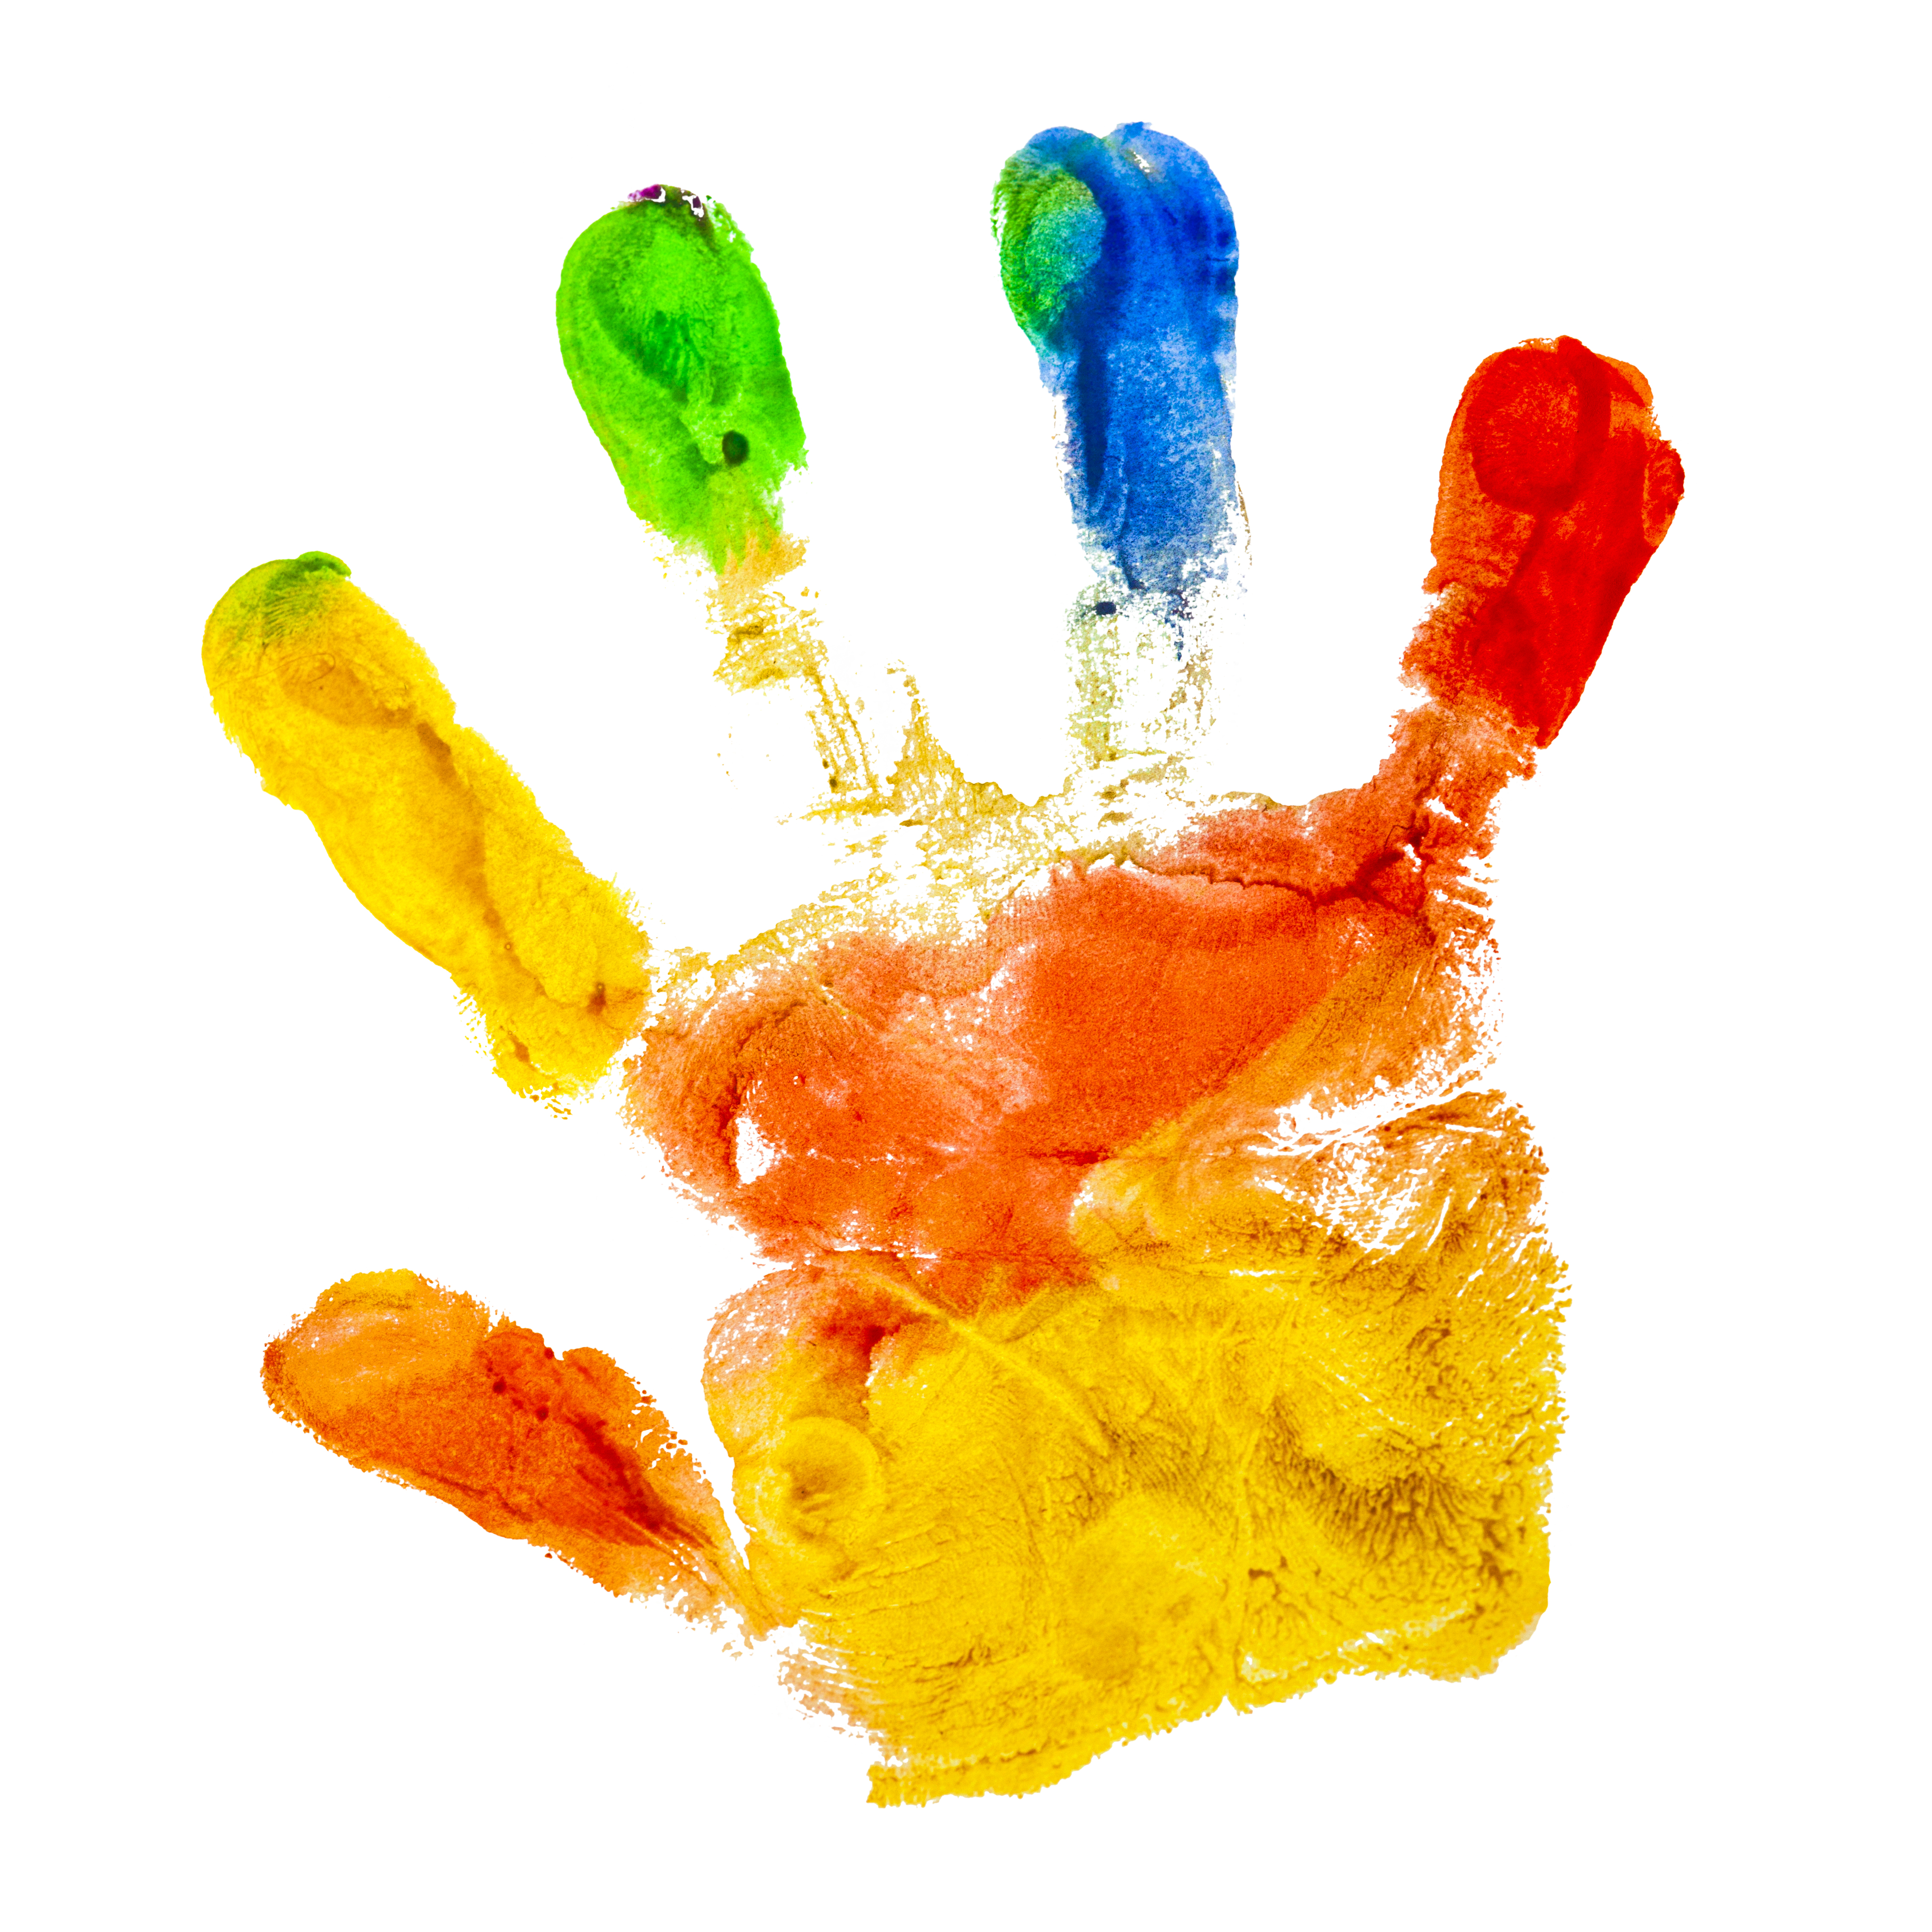 child's handprint impression in paint